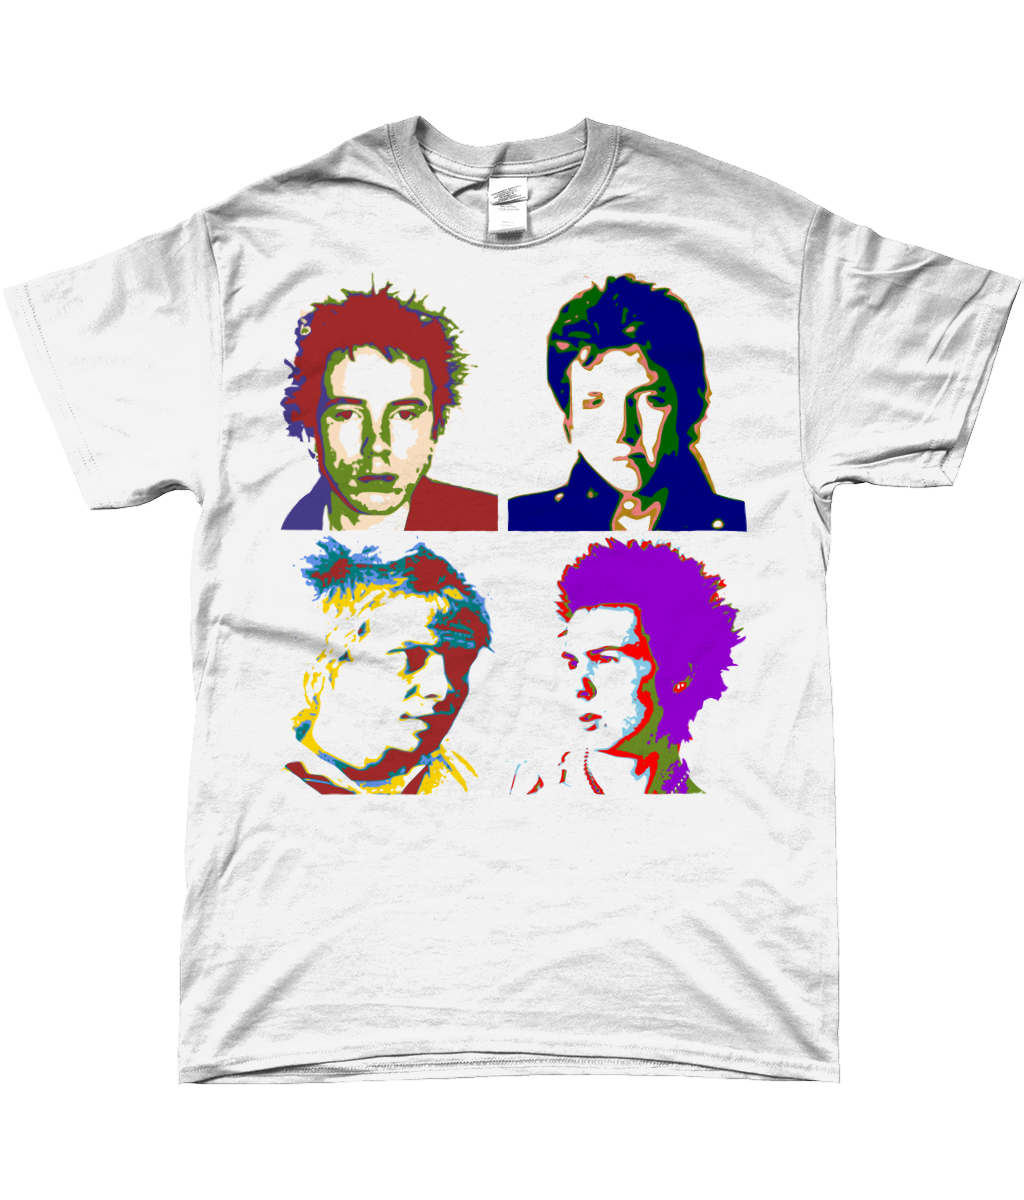 Sex Pistols t-shirt